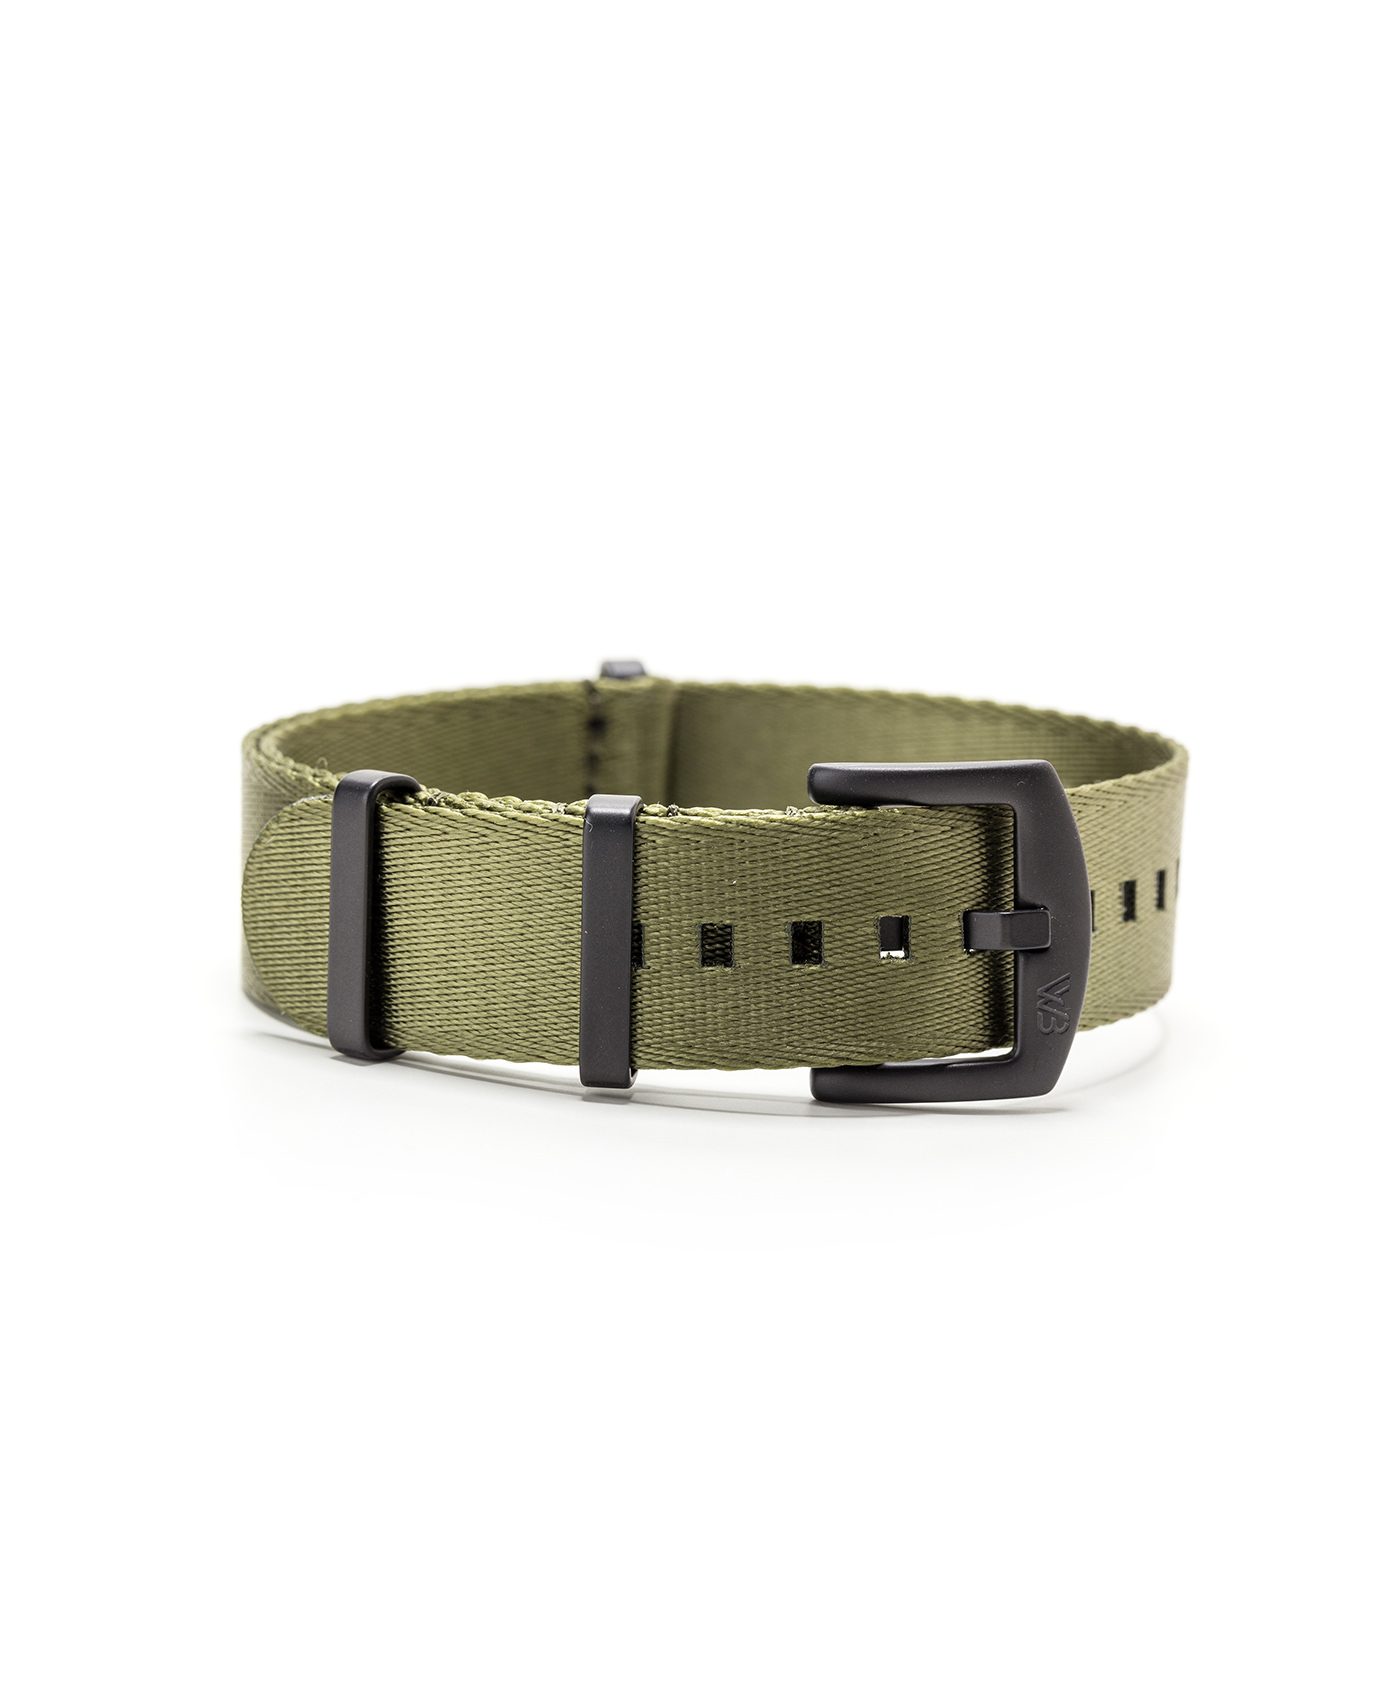 Watchbandit WB original Wristporn Nato strap in olive green and black buckles